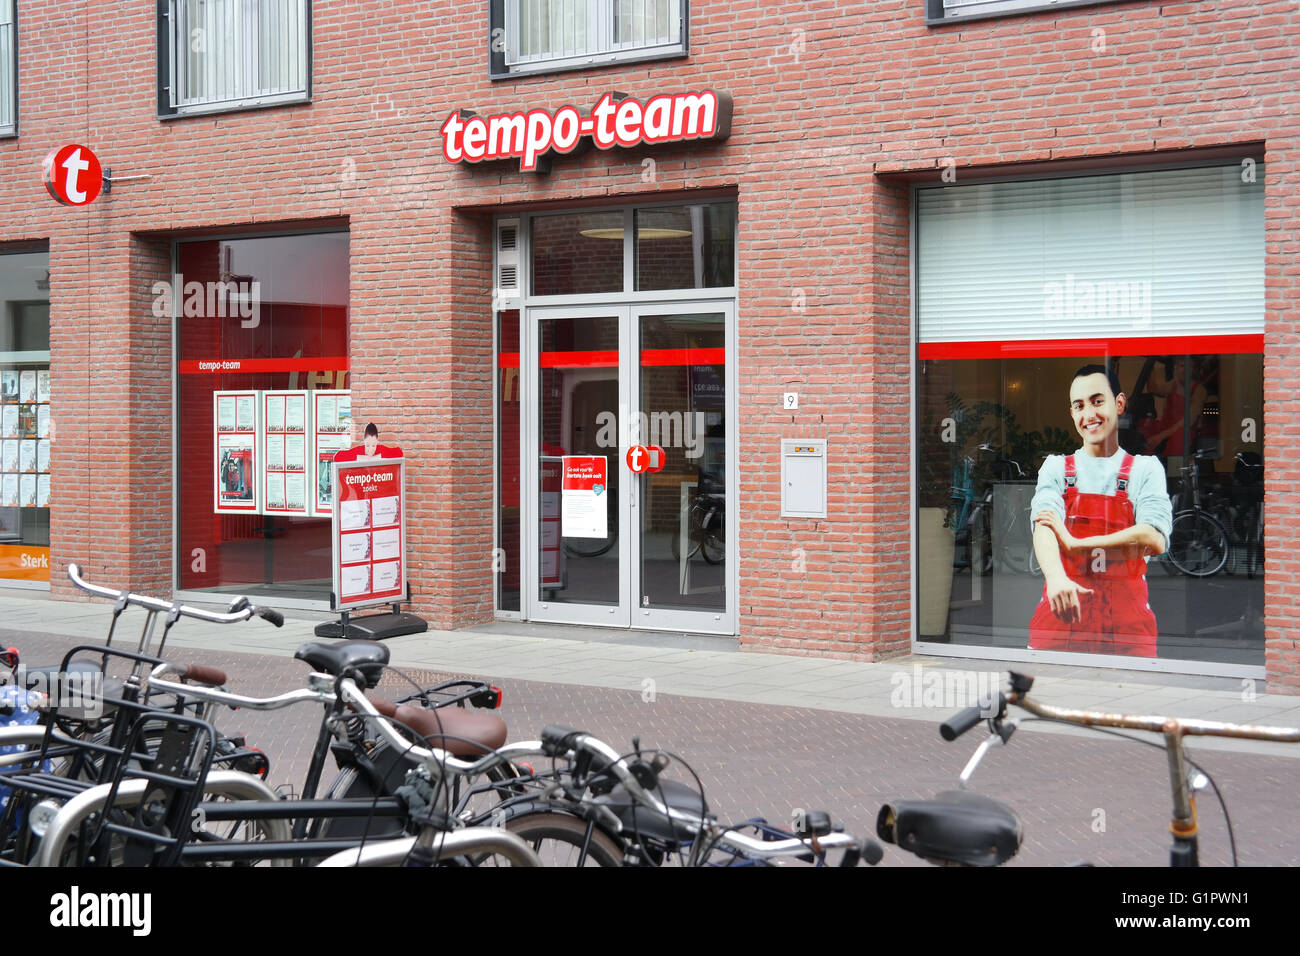 Tempo-team Employment agency Stock Photo